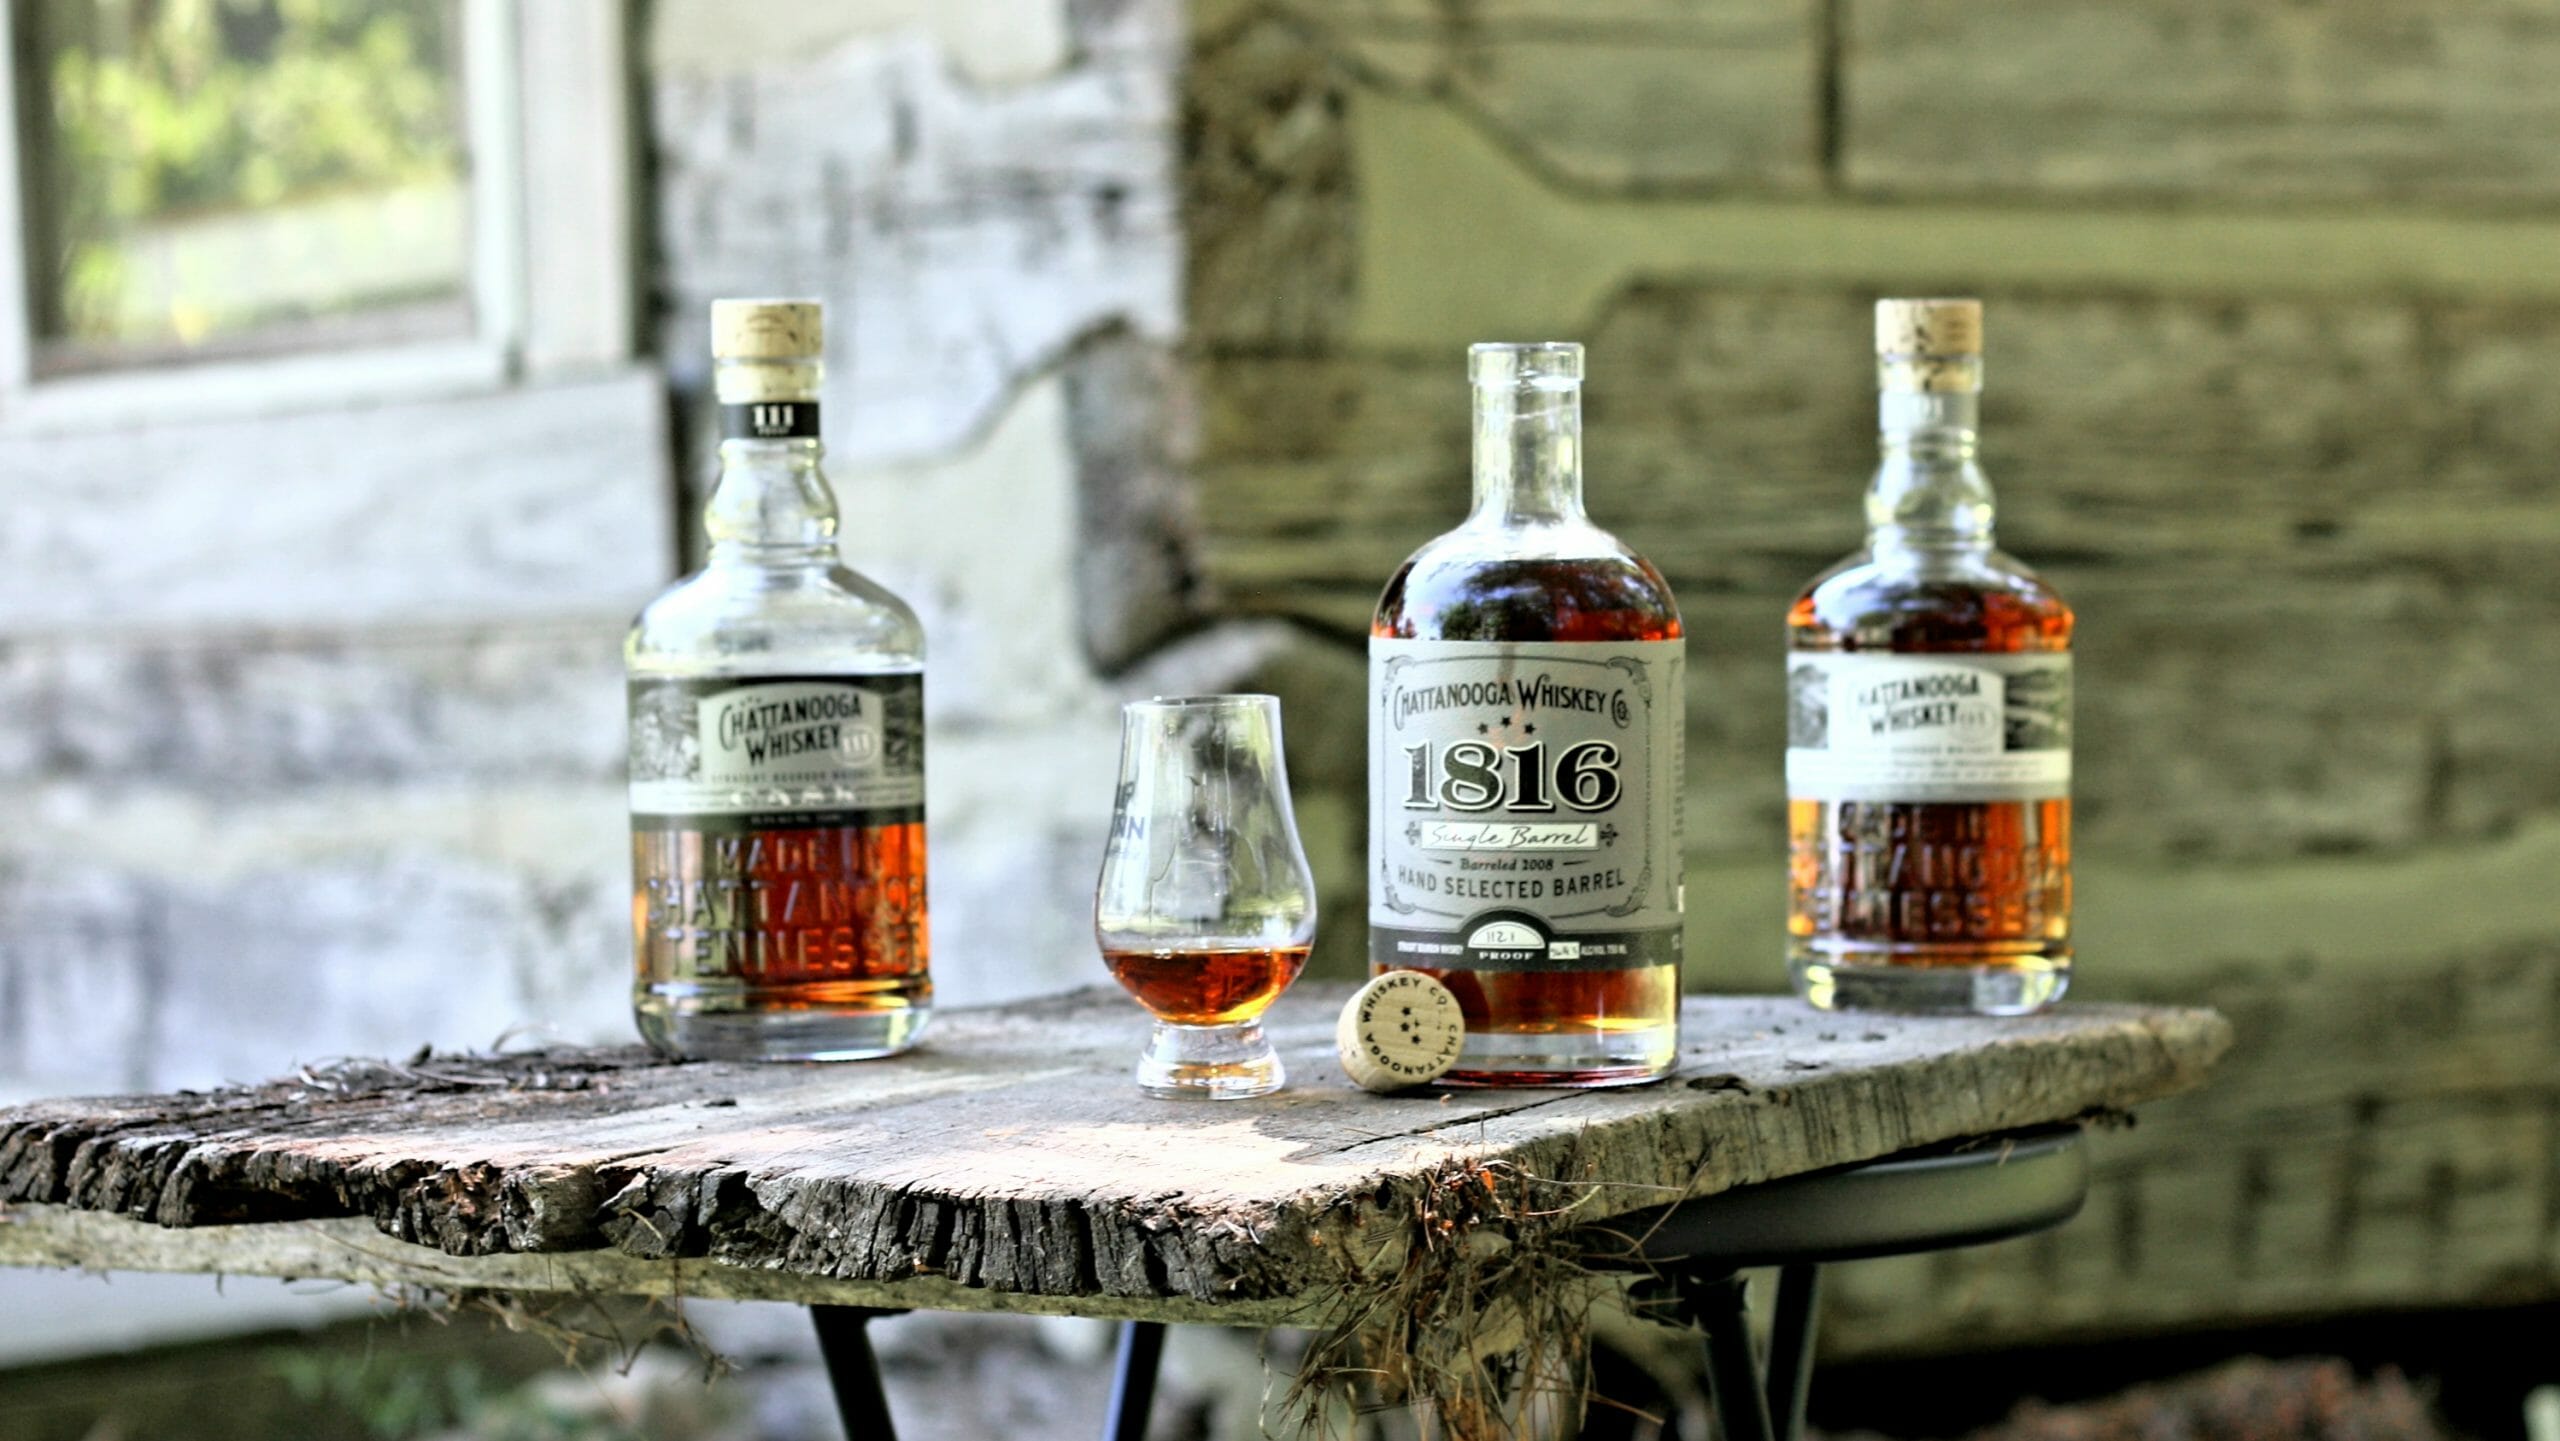 Chattanooga Whiskey Distillery 1816 Single Barrel Alabama Bicentennial Review